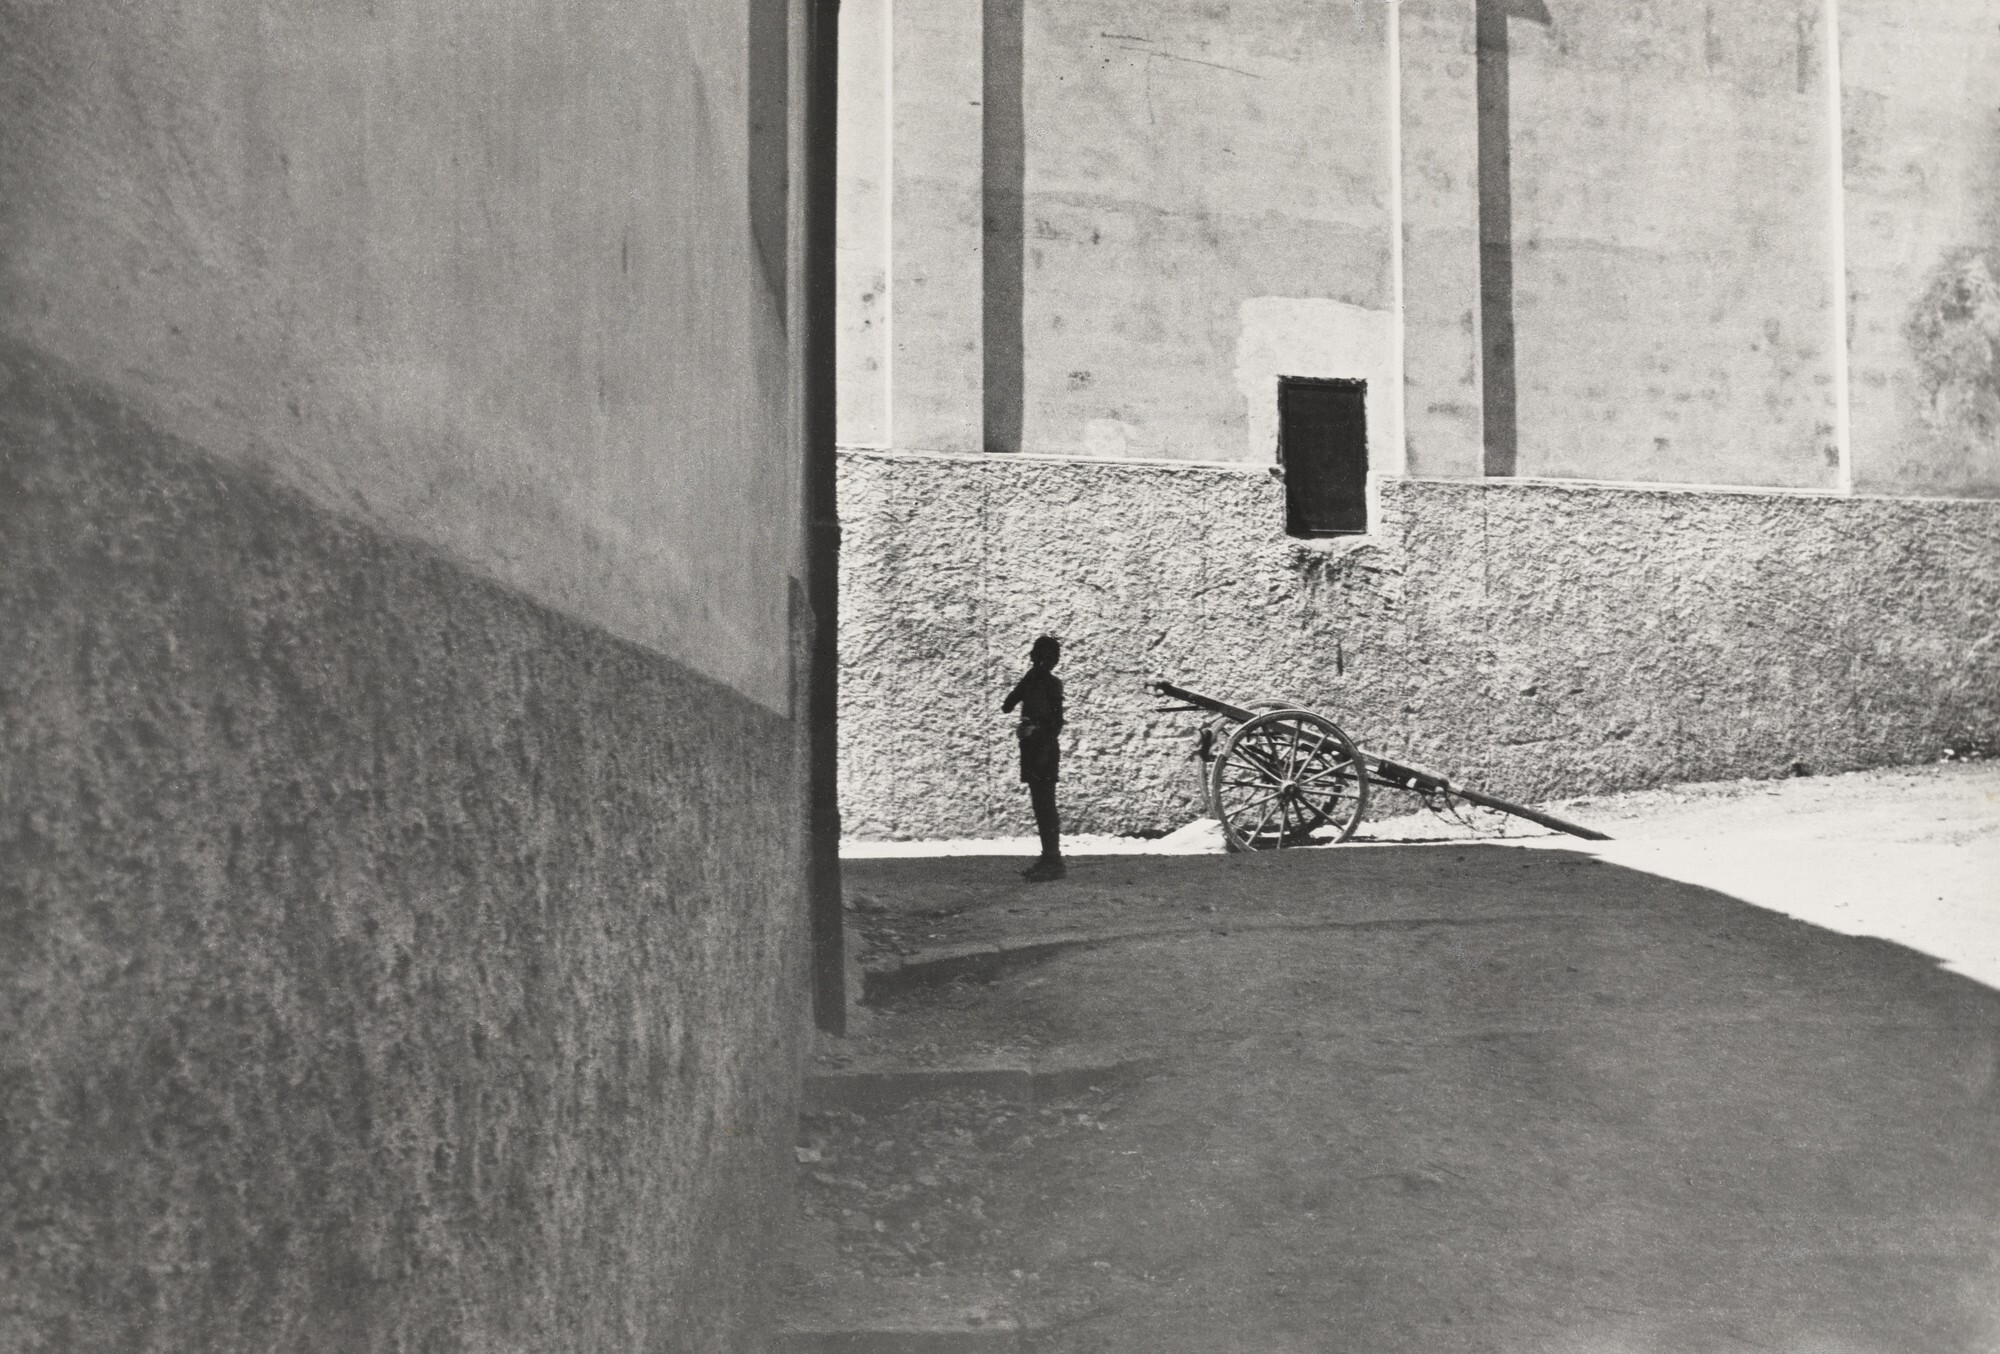 Салерно, Италия, 1933. Фотограф Анри Картье-Брессон